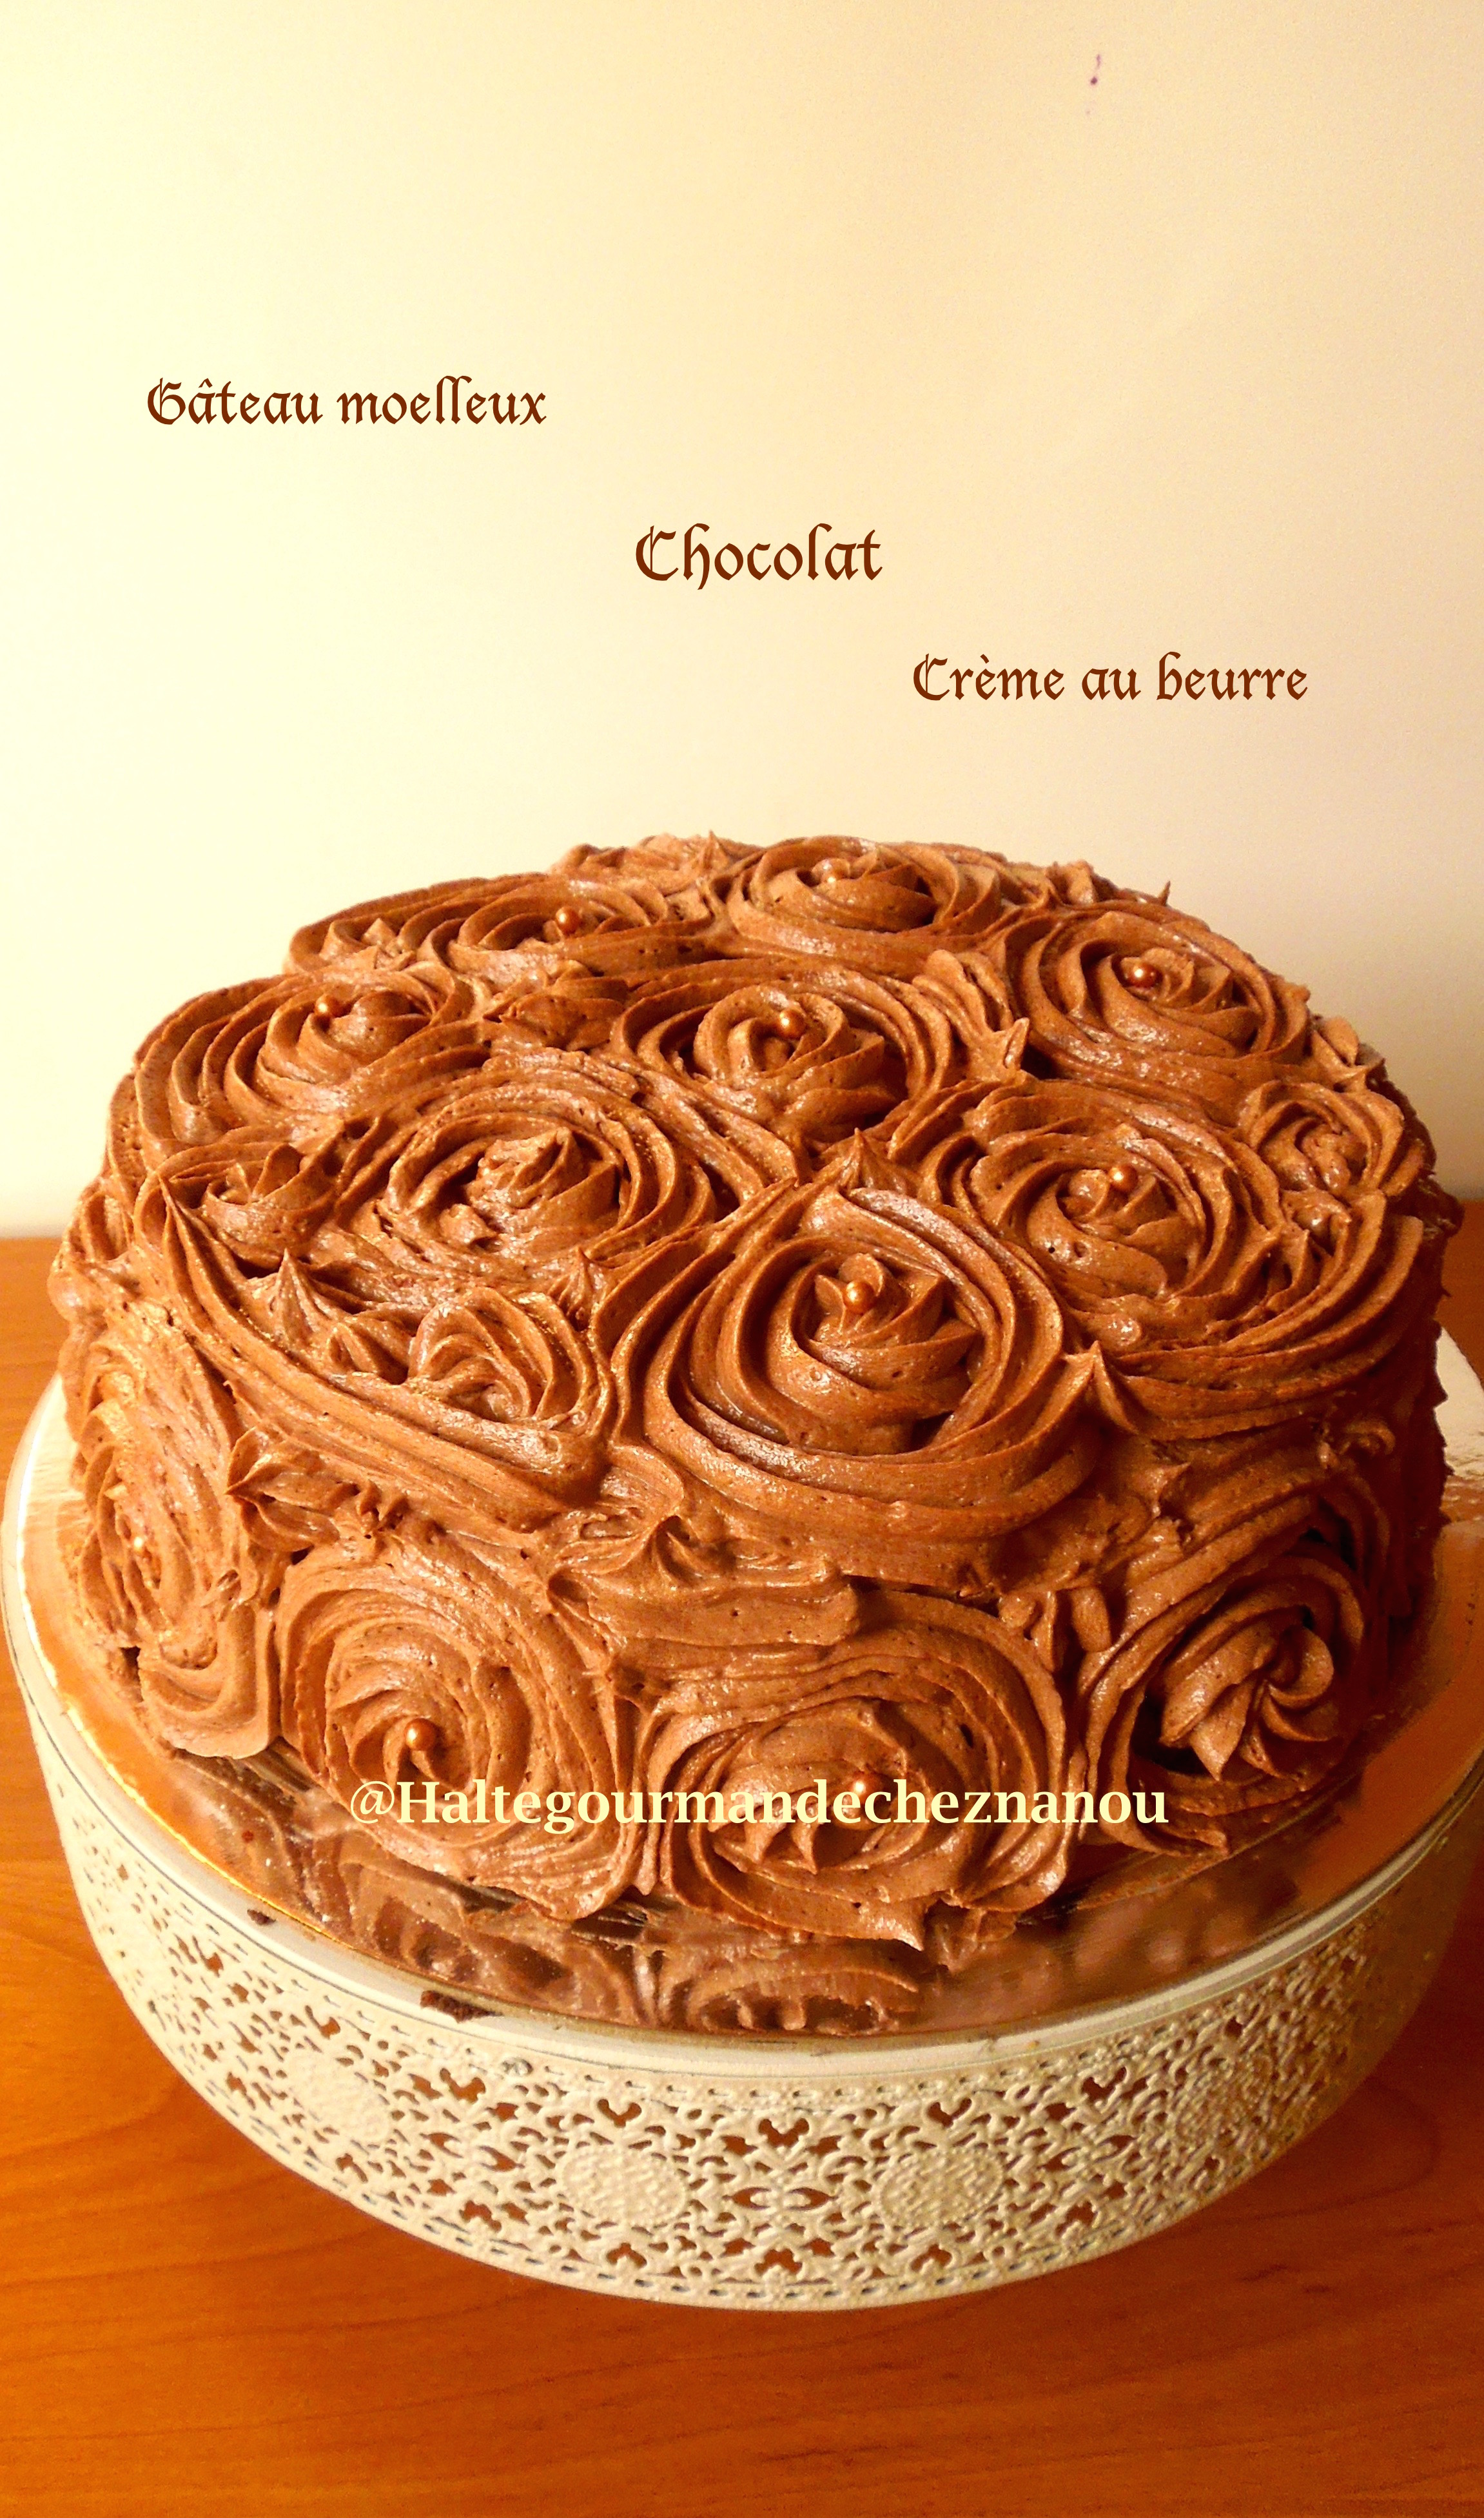 Chocolate Layer Cake A L Americaine Halte Gourmande Chez Nanou